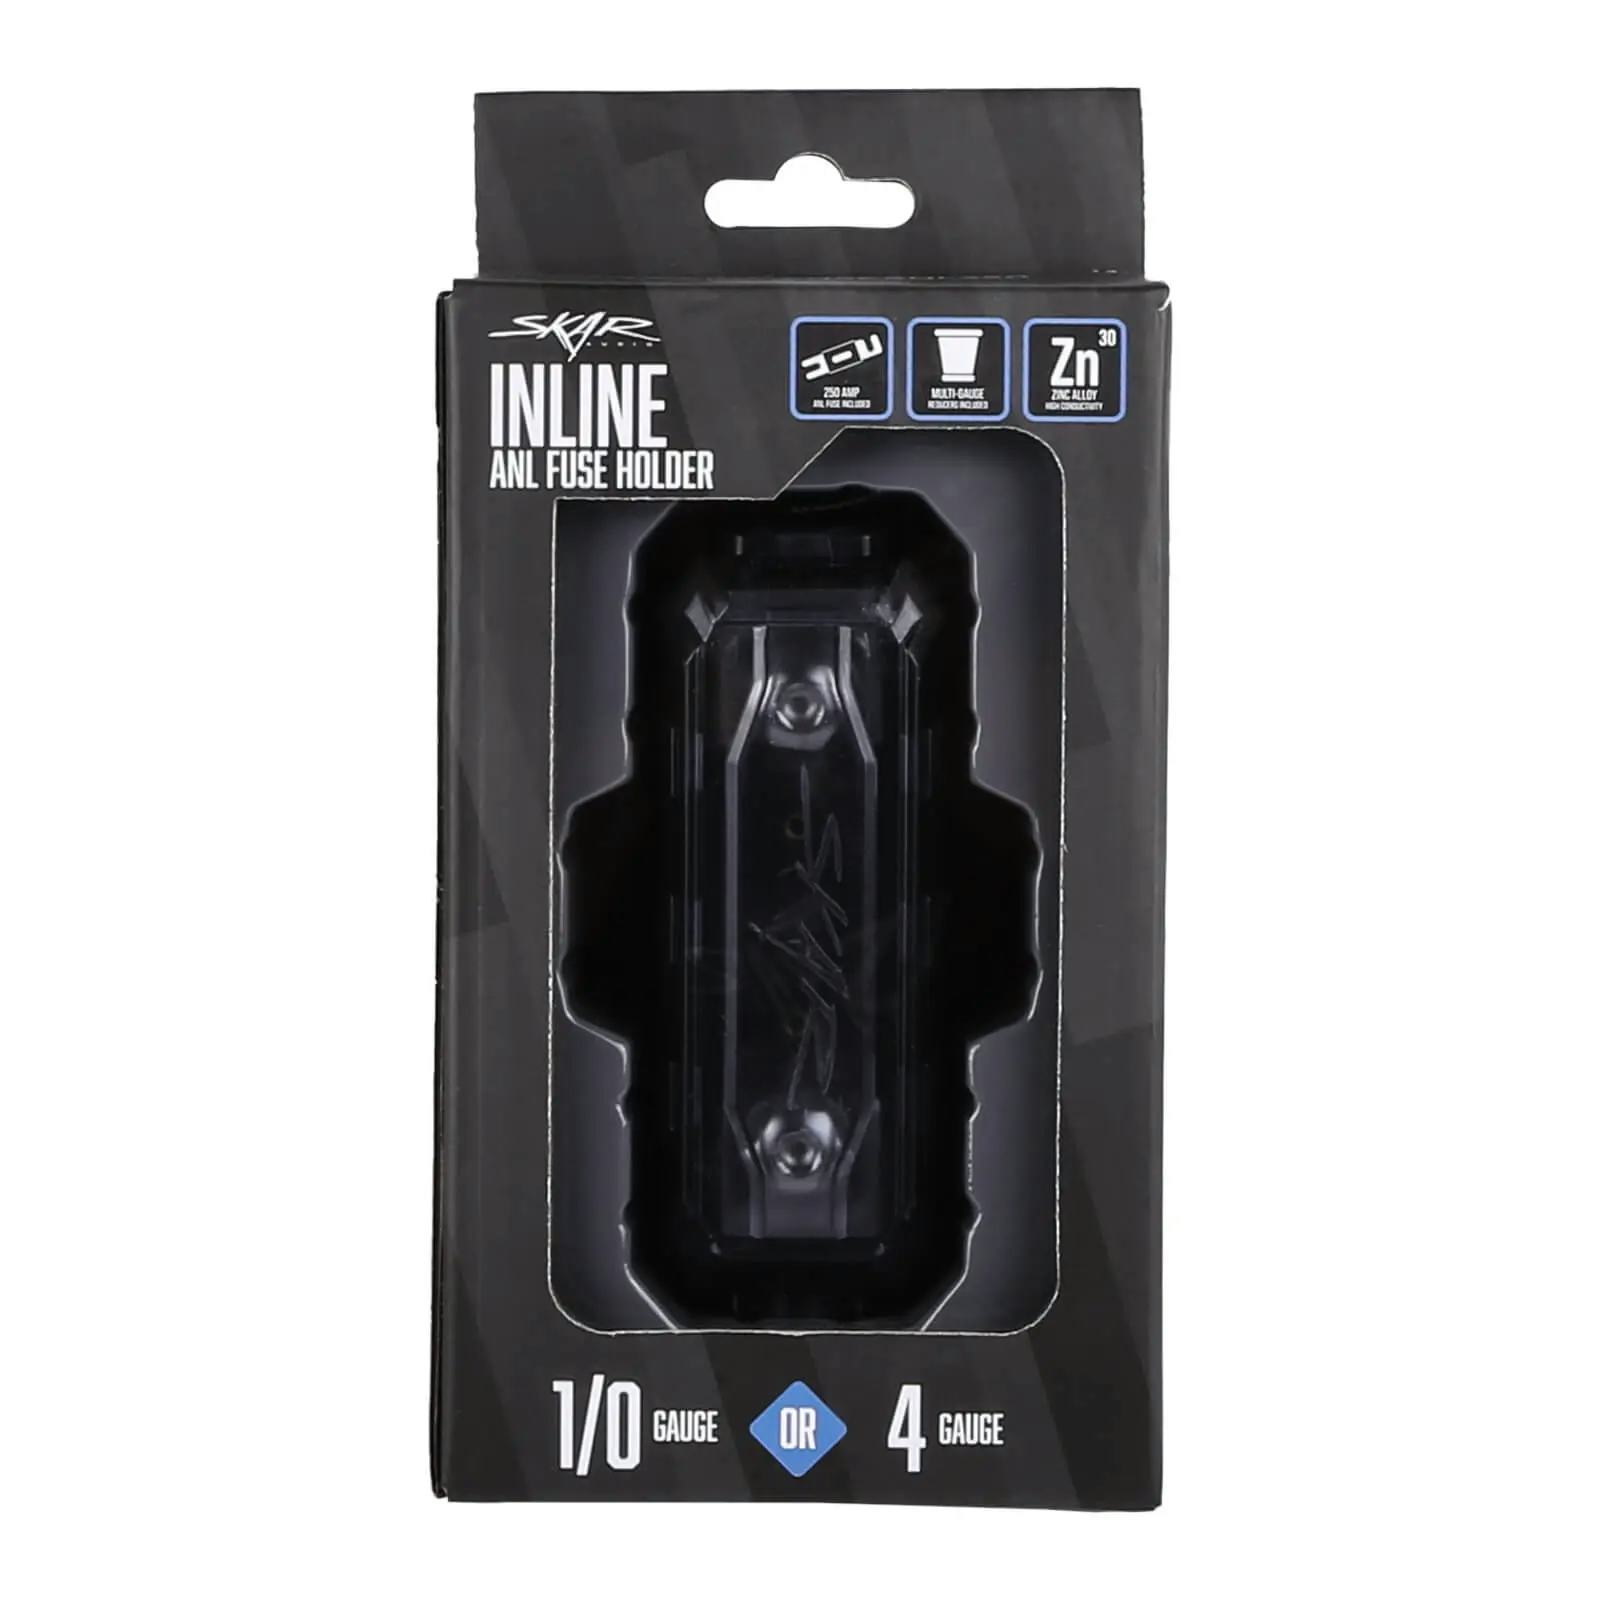 SK-INLINE-FUSEANL250 | 1/0 or 4 Gauge Inline ANL Fuse Holder - 250 Amp ANL Fuse #8